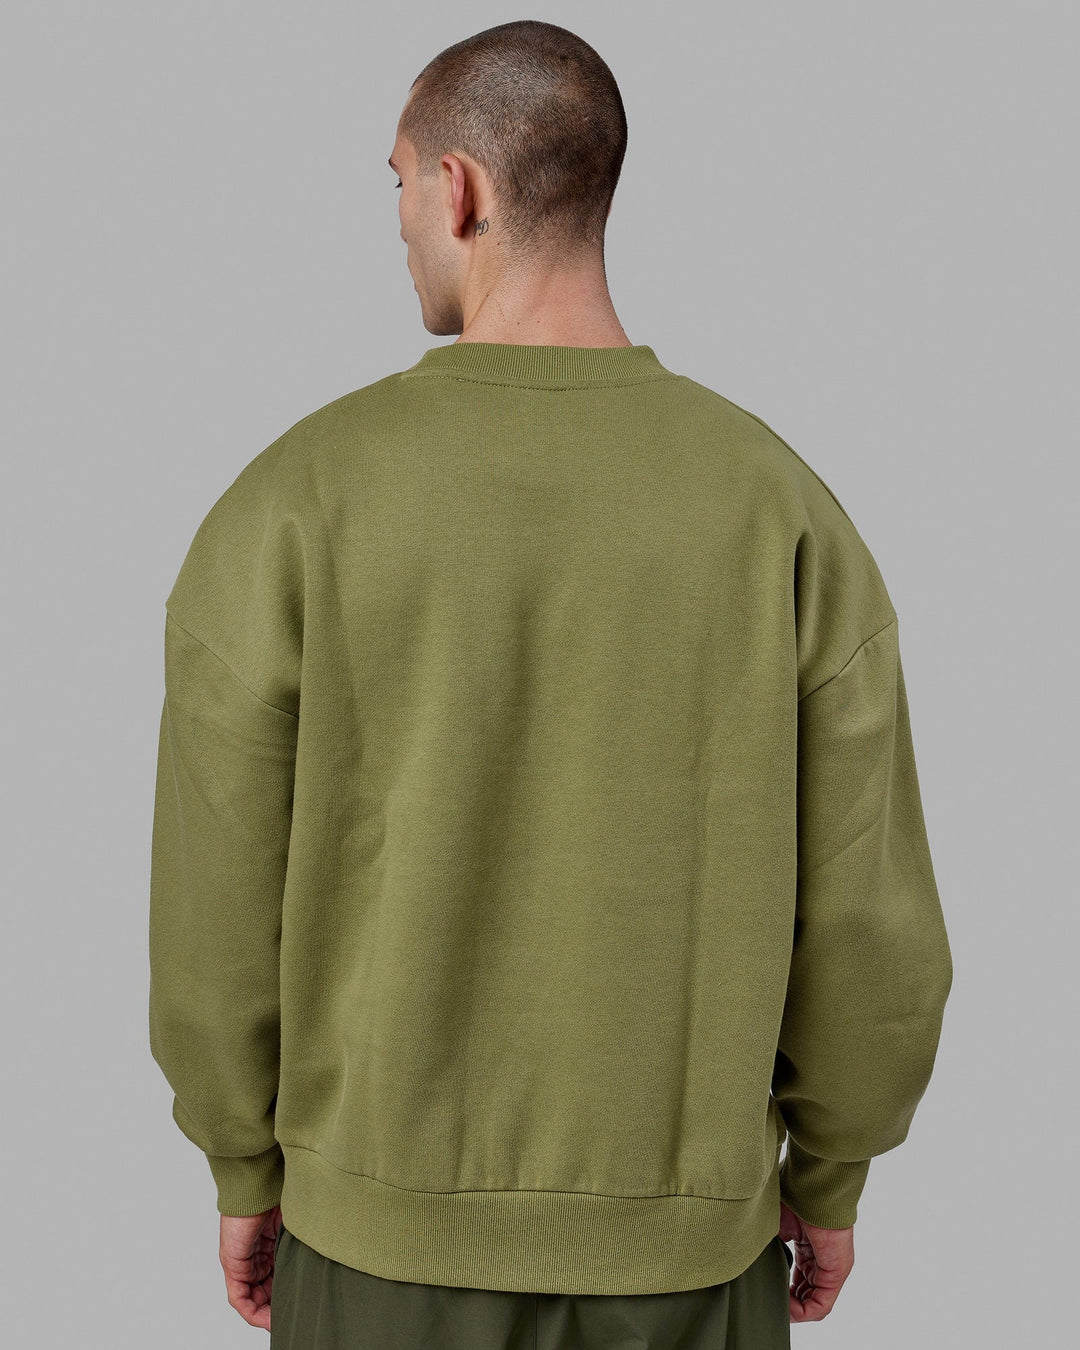 Man wearing Unisex Stamped Sweater Oversize - Moss Stone